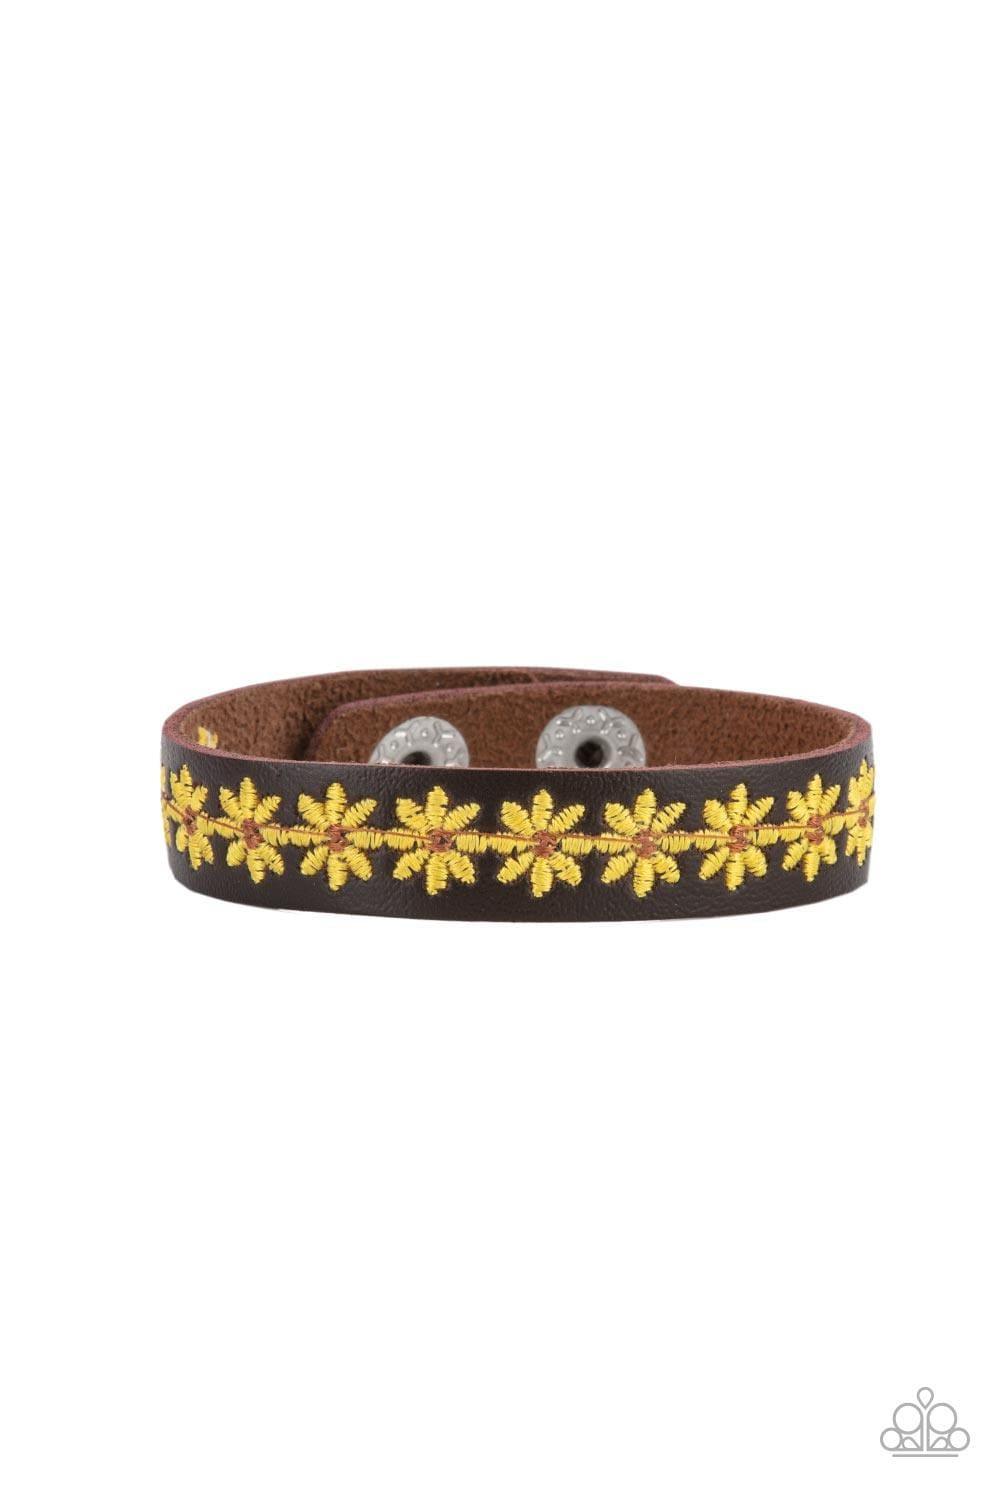 Paparazzi Accessories - Wildflower Wayfarer - Yellow Snap Bracelet - Bling by JessieK